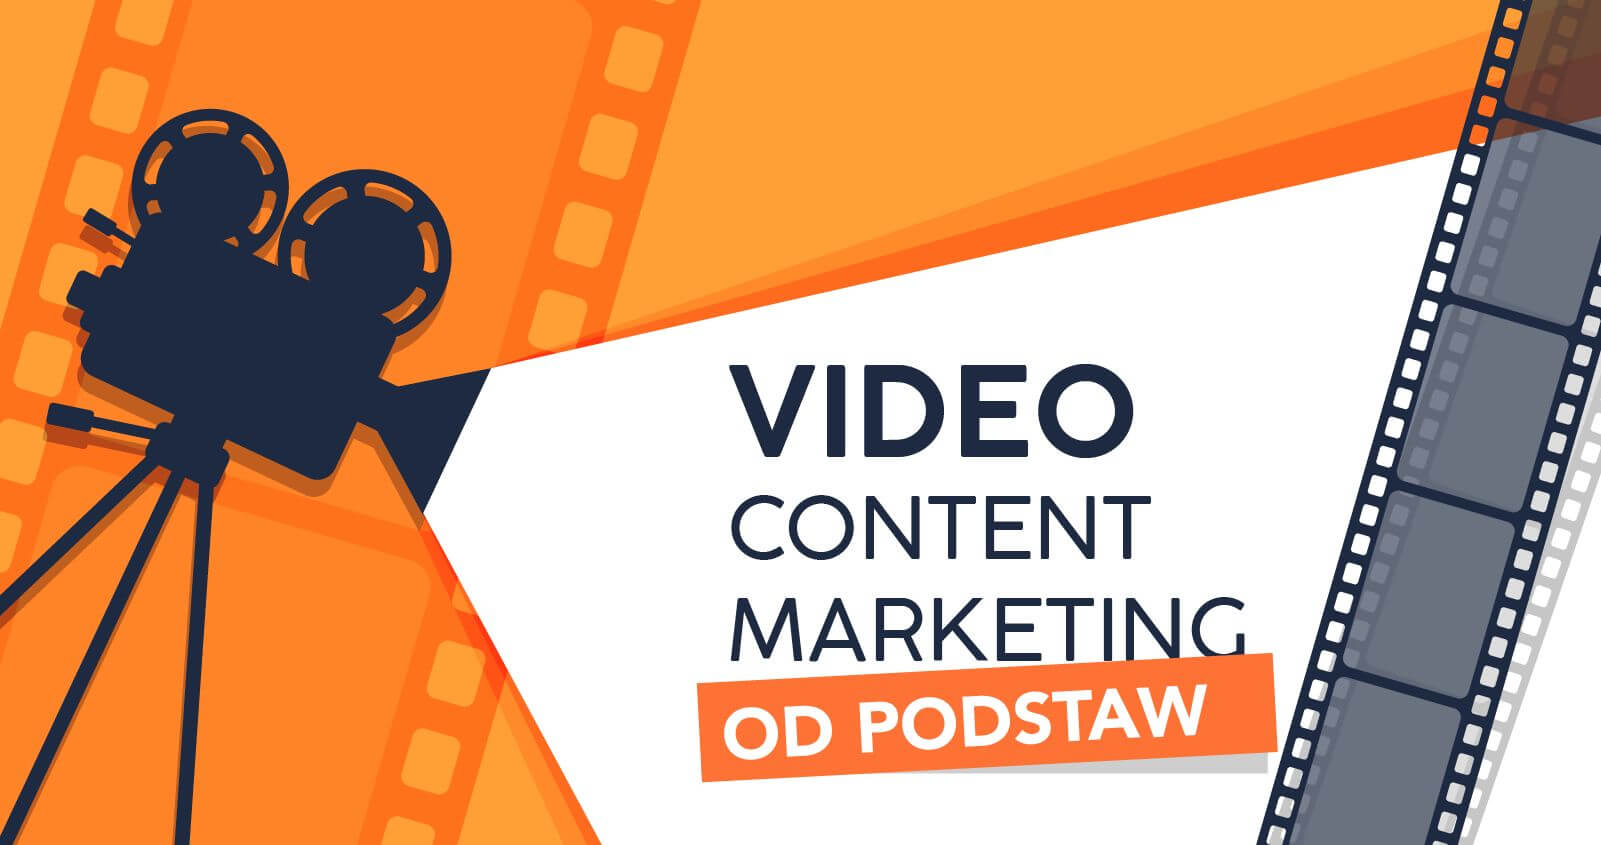 Video content marketing od podstaw